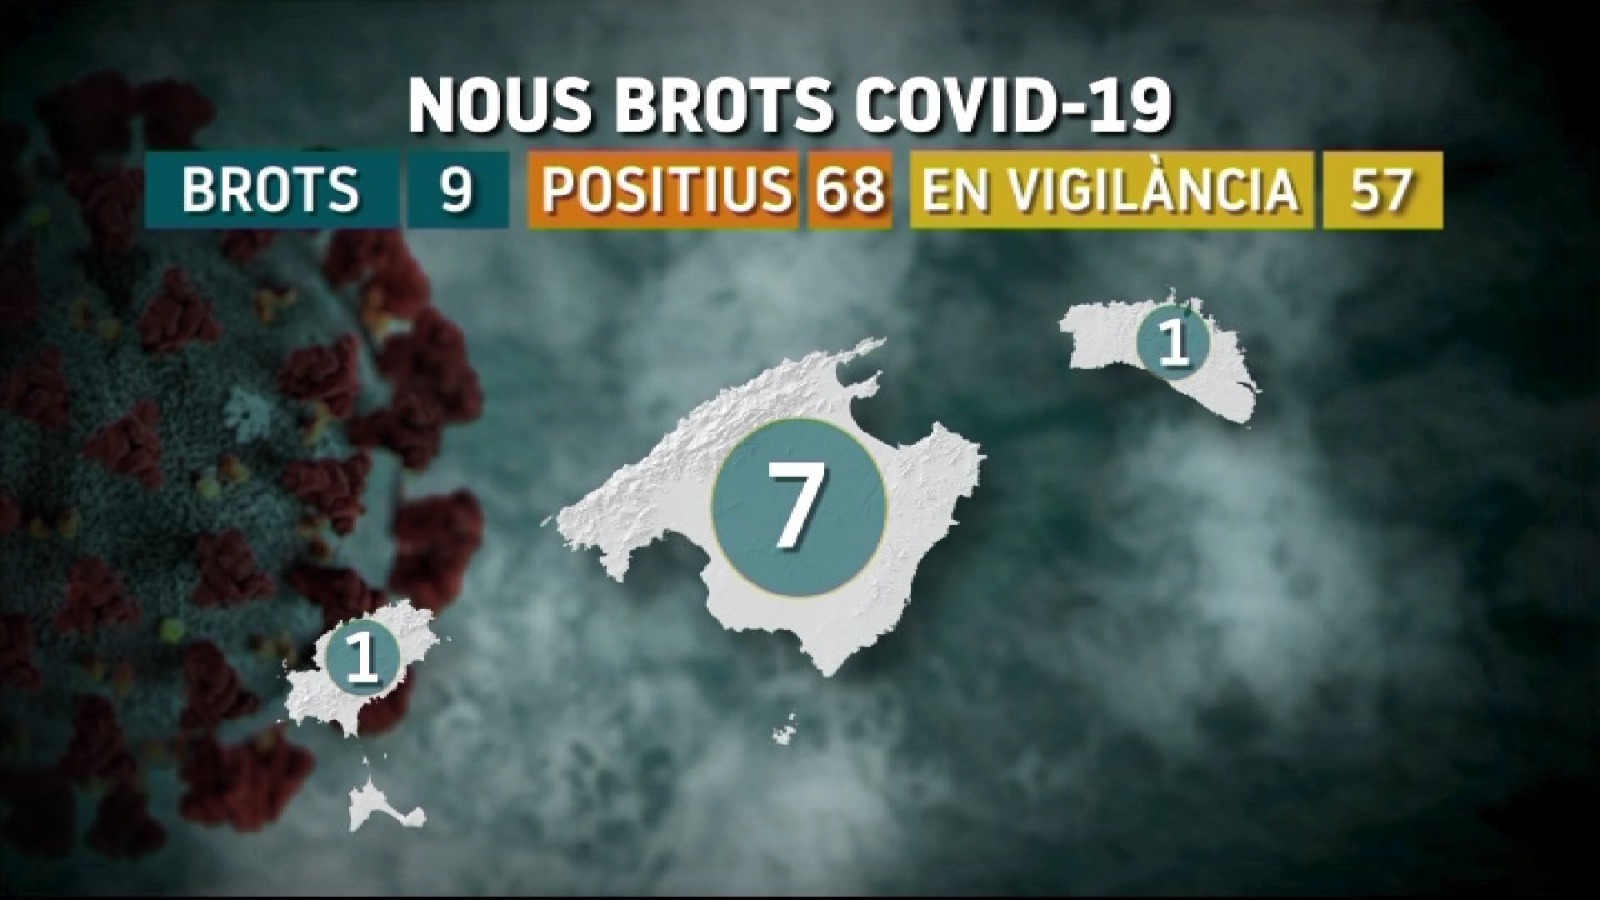 Salut notifica 9 brots nous a les Illes Balears, amb 68 positius